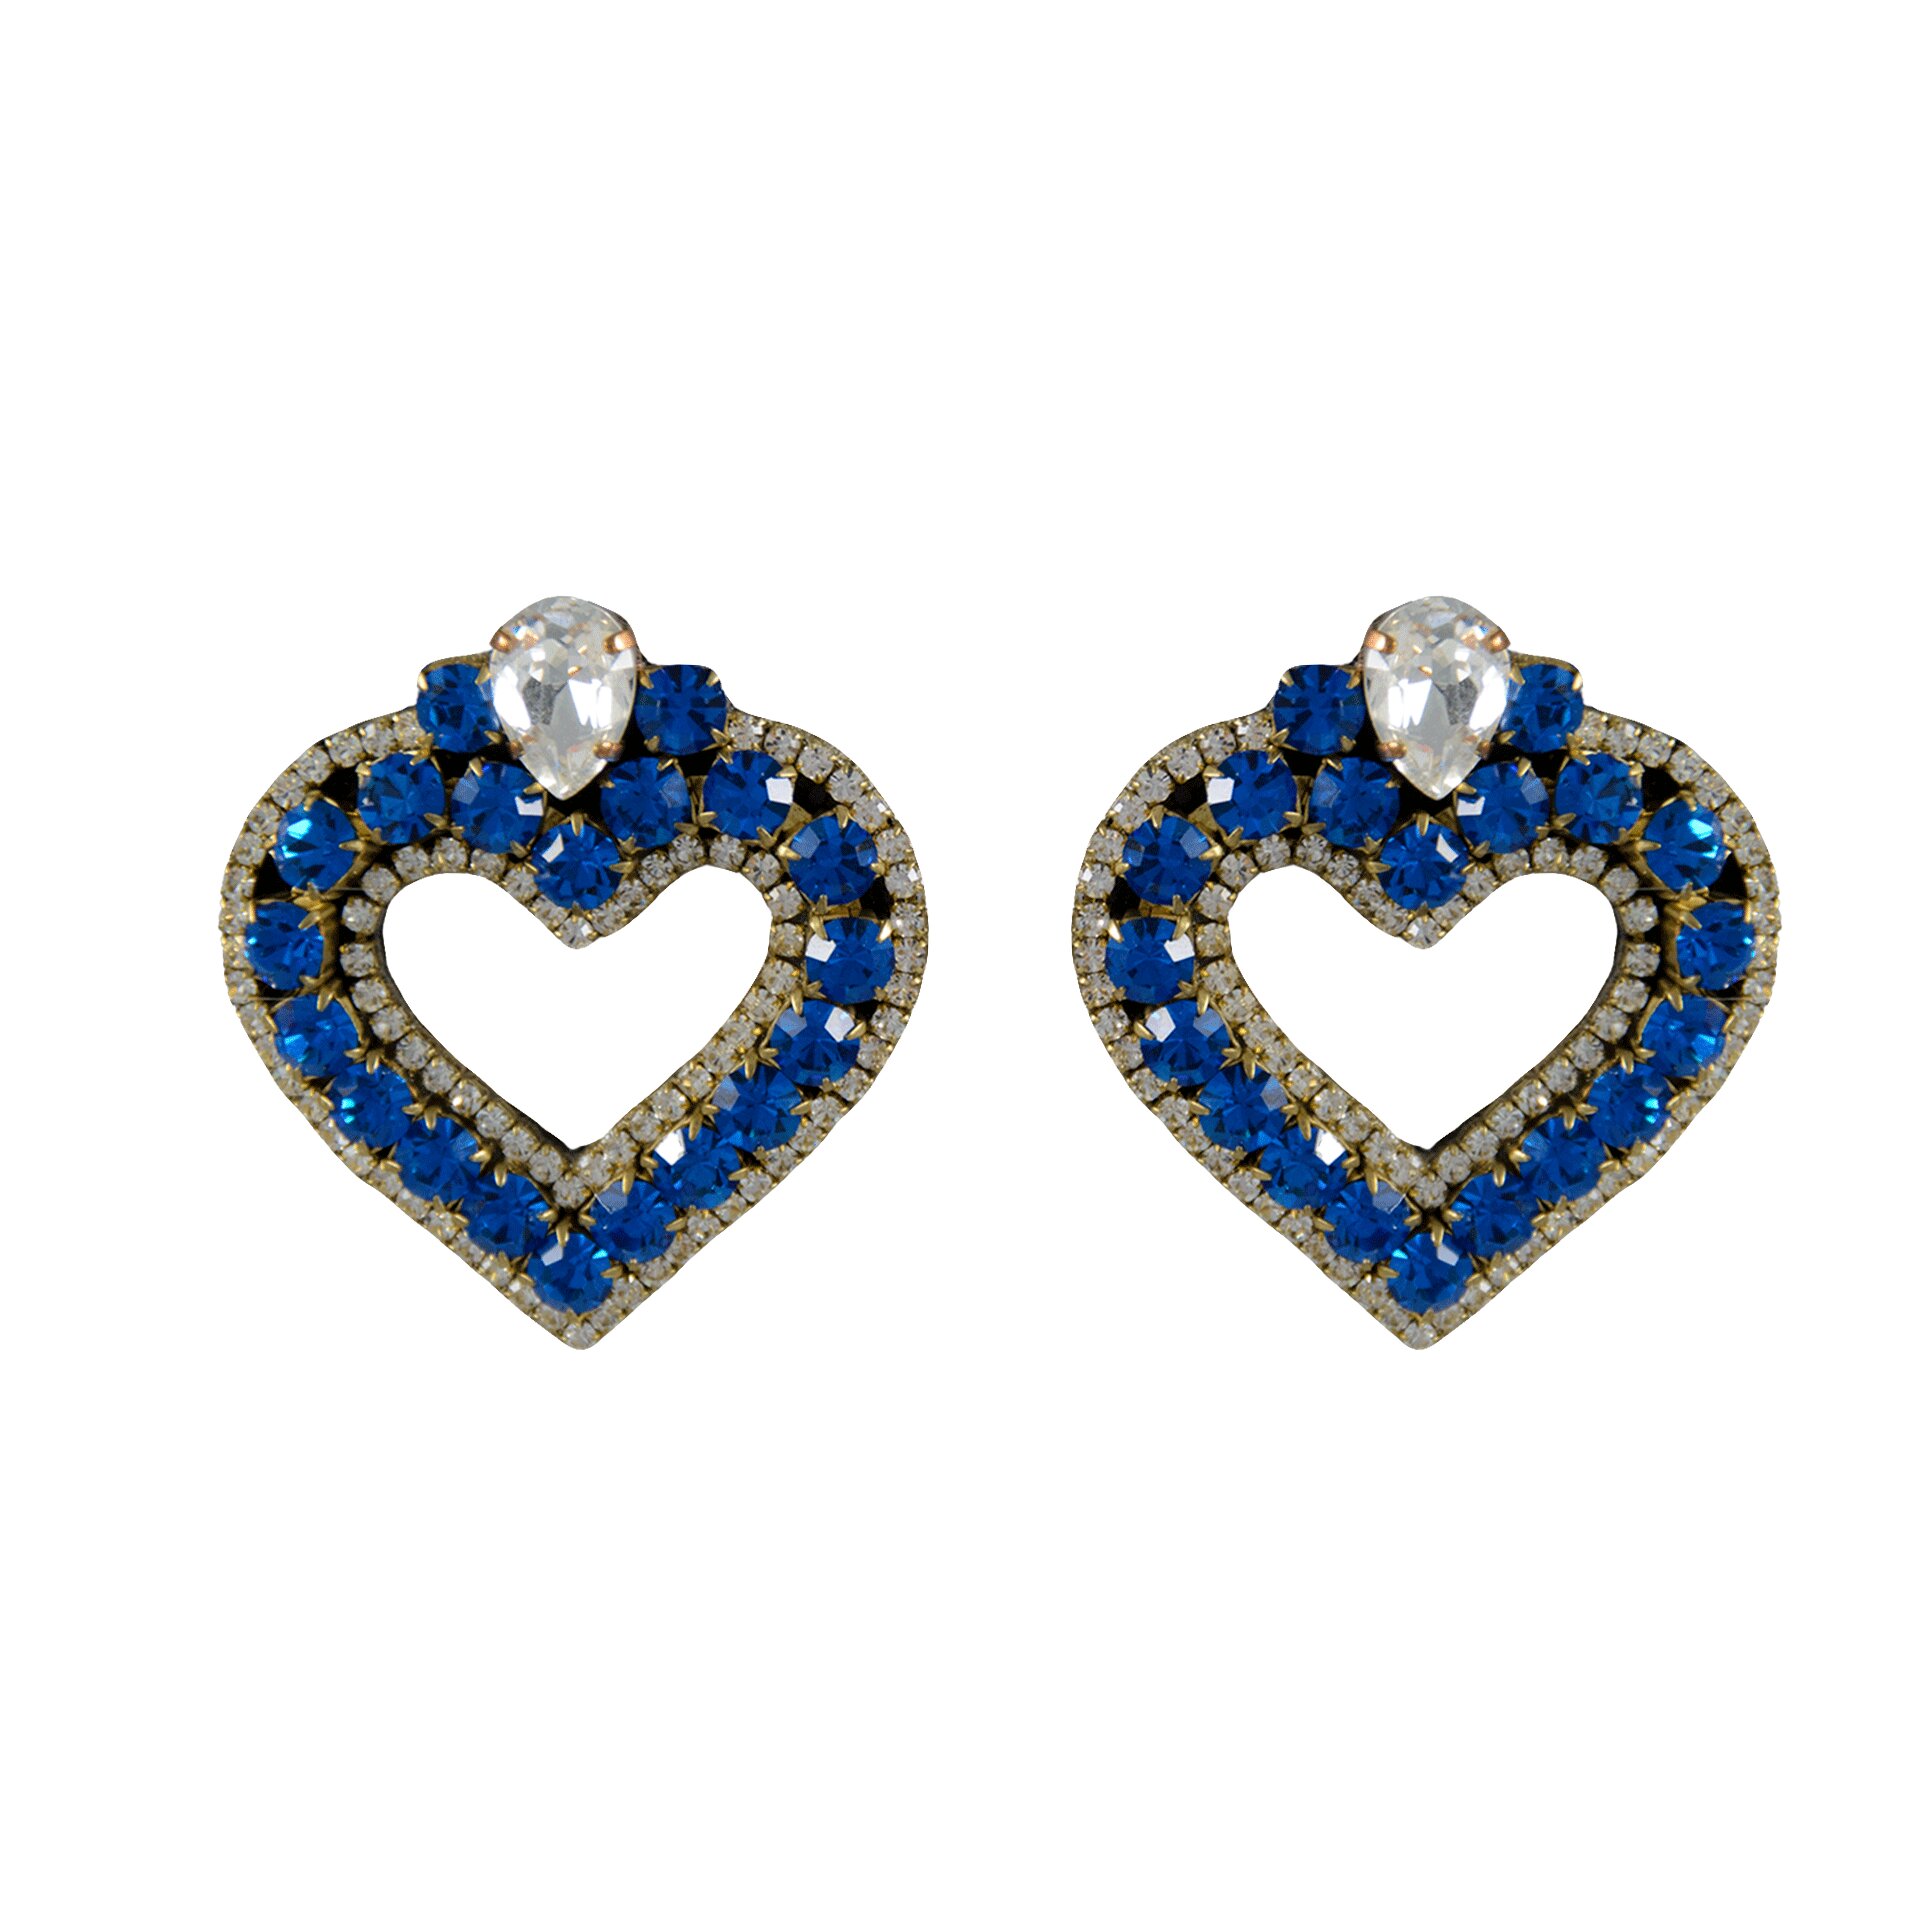 LINDA'S DREAM blue hearts with preciosa crystal